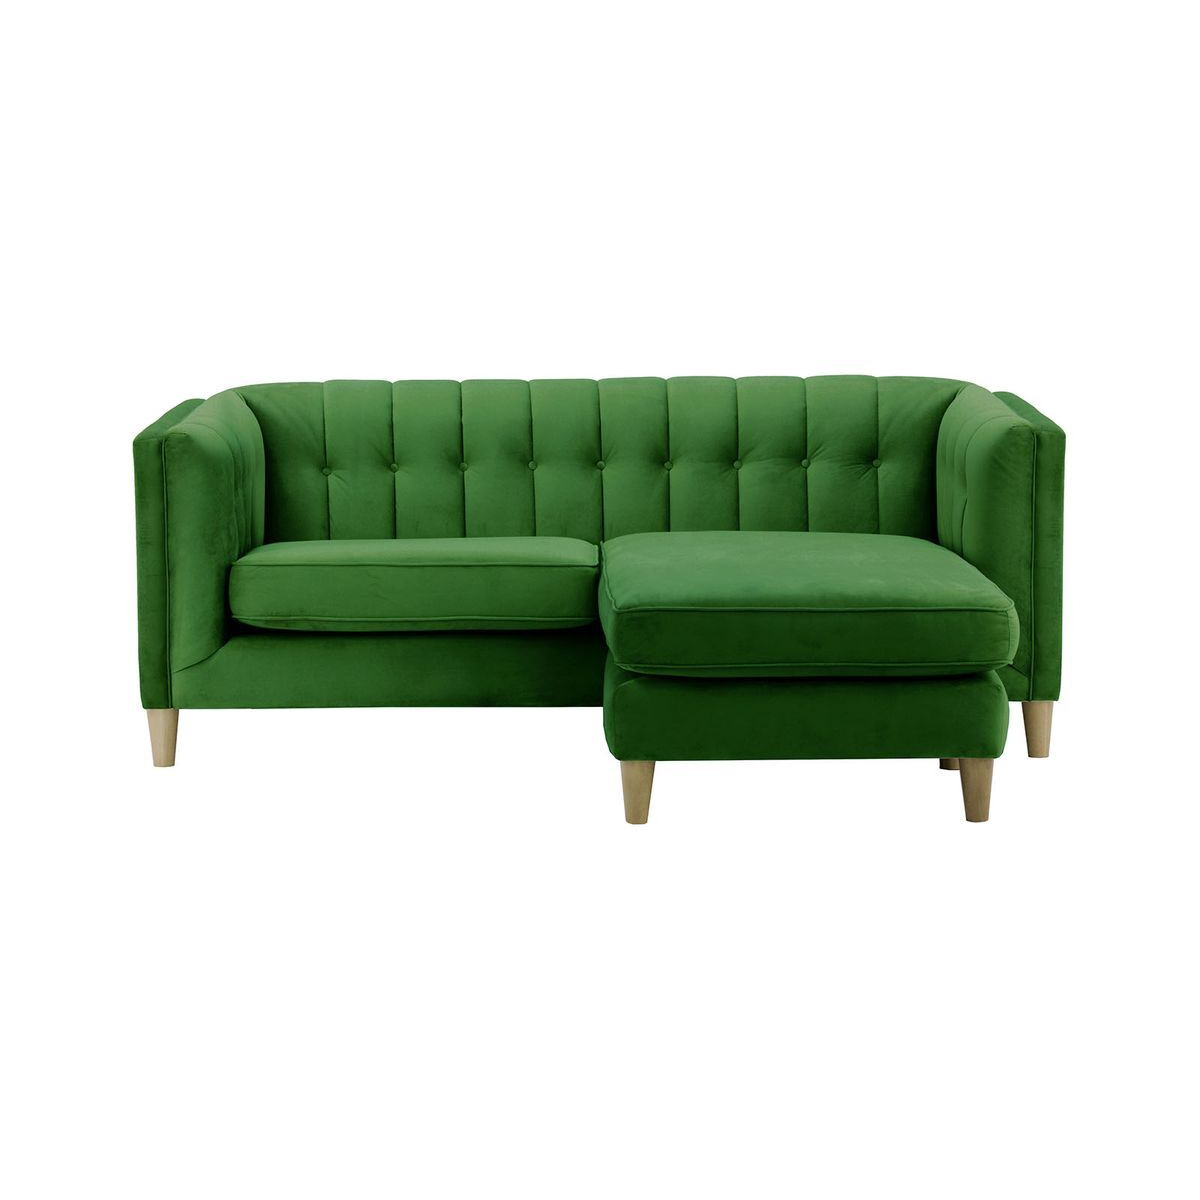 Sodre Universal Corner Sofa, dark green, Leg colour: aveo - image 1